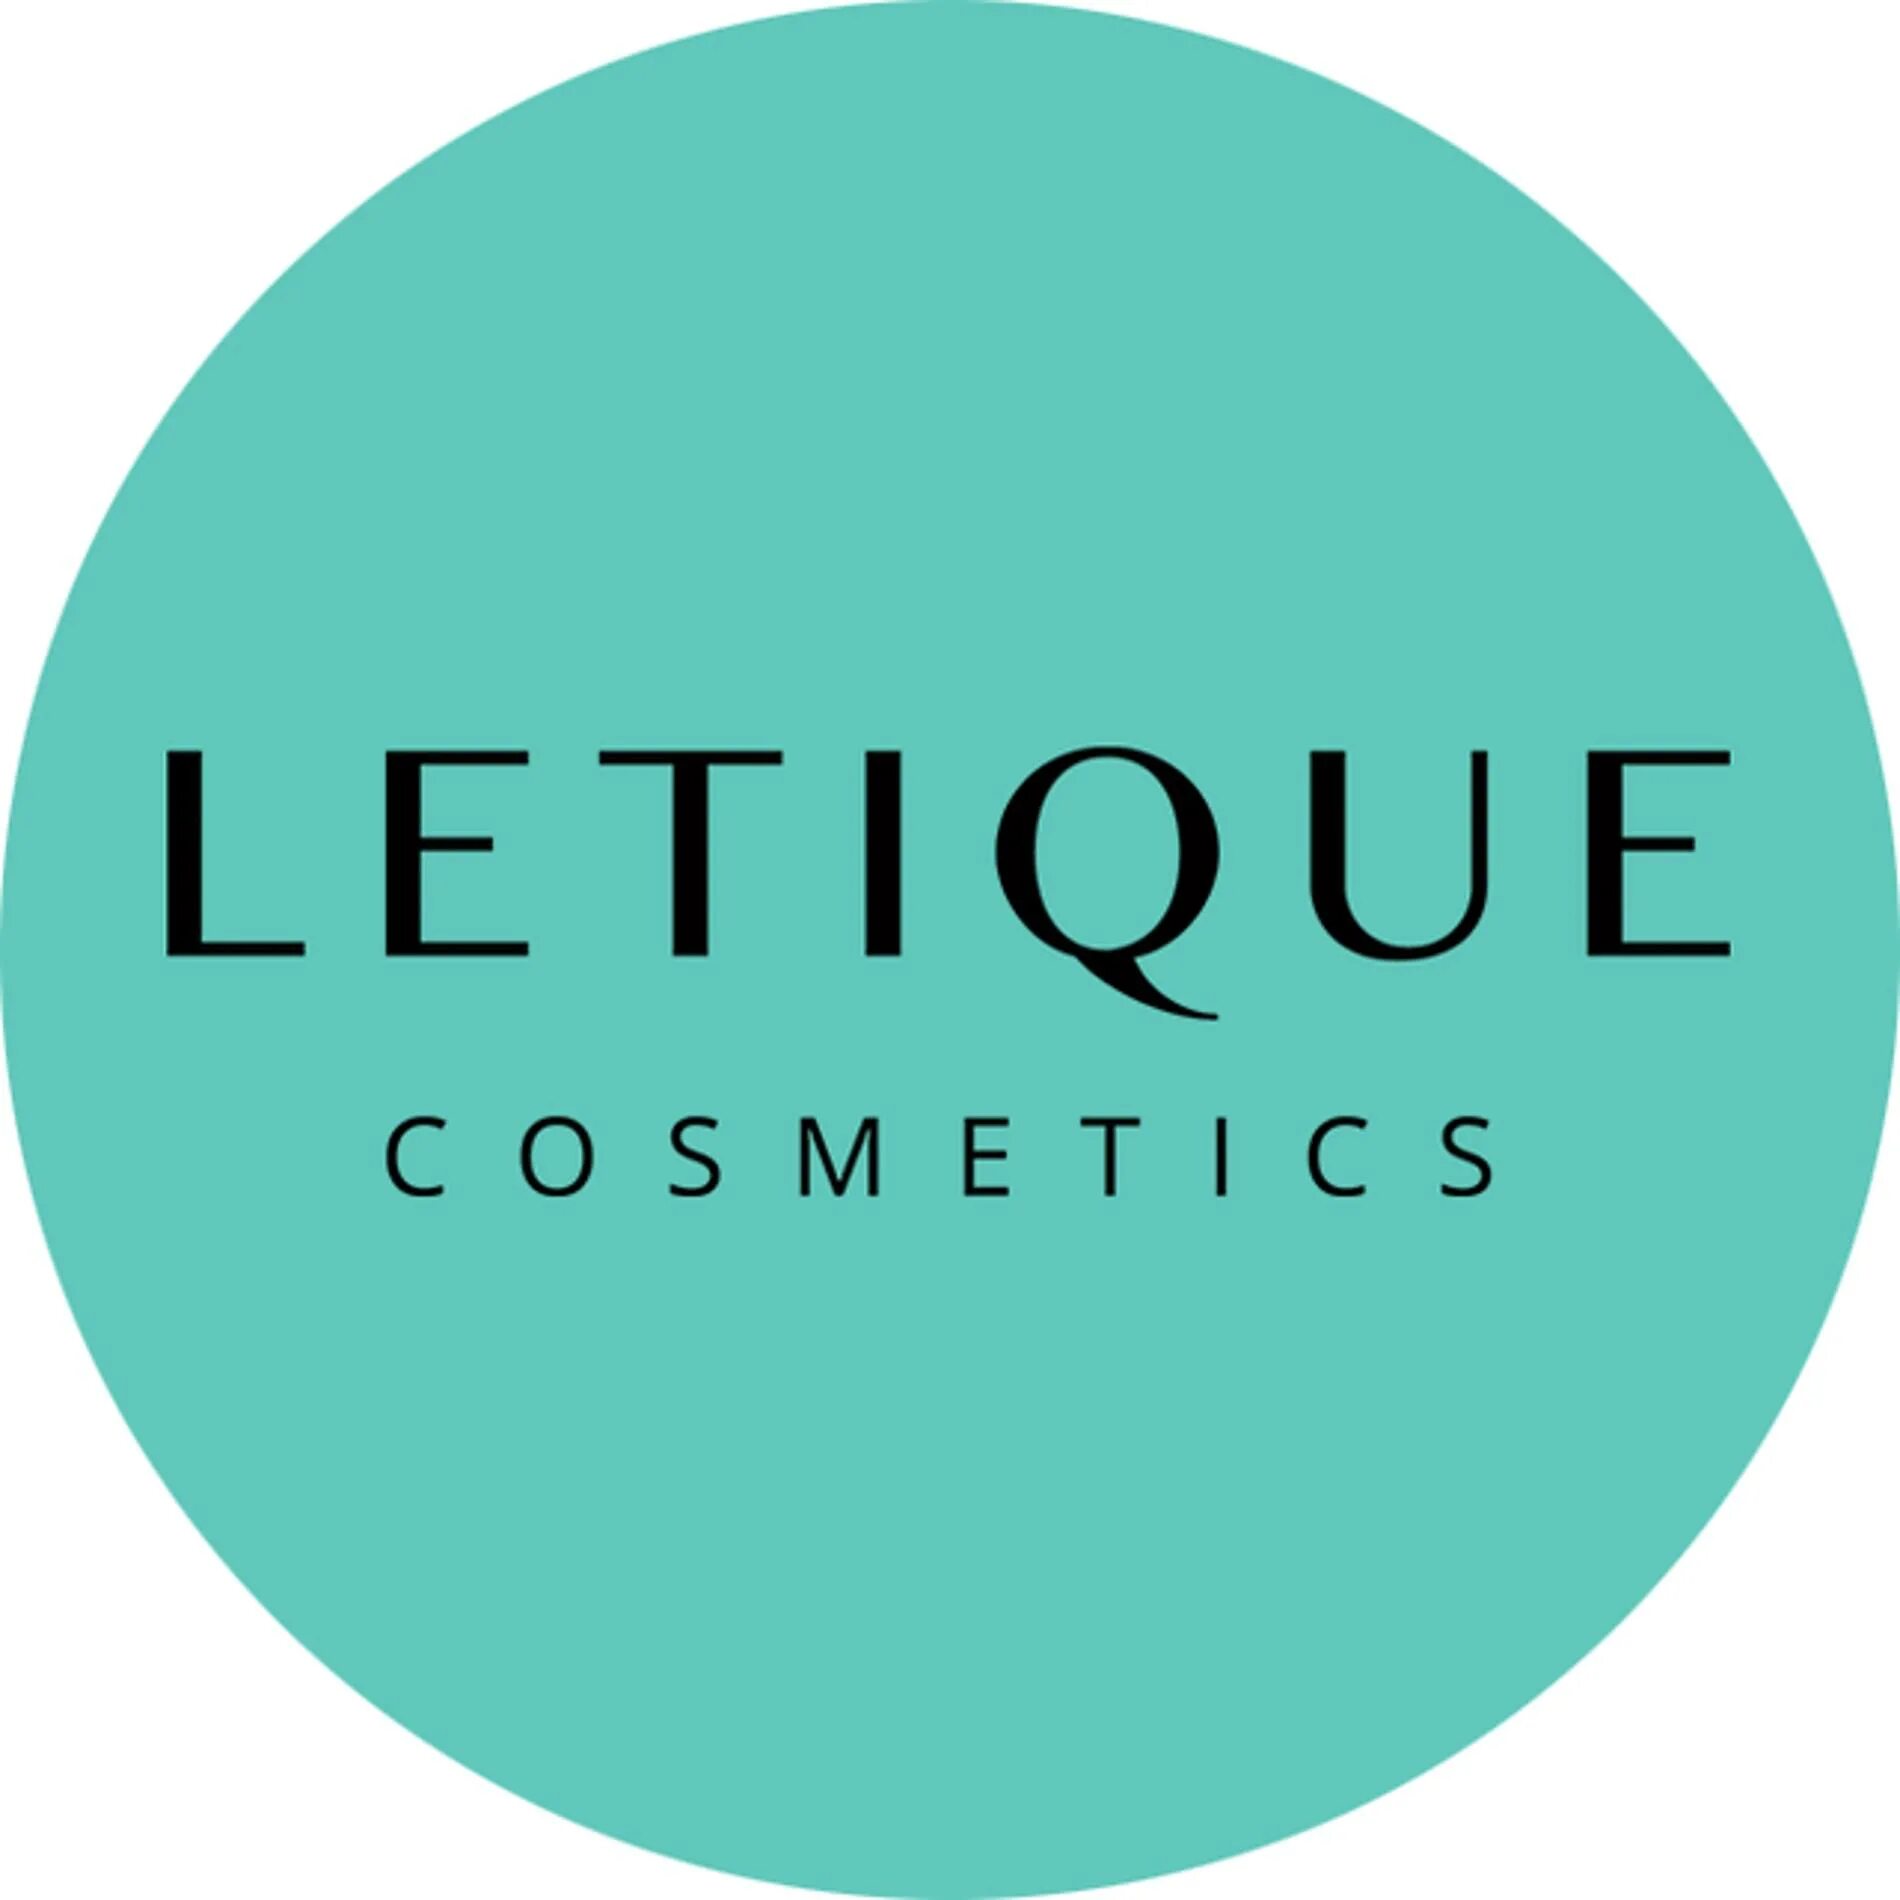 Letique cosmetics. Косметика Letique. Letique логотип. Логотип косметики. Косметичка Letique.